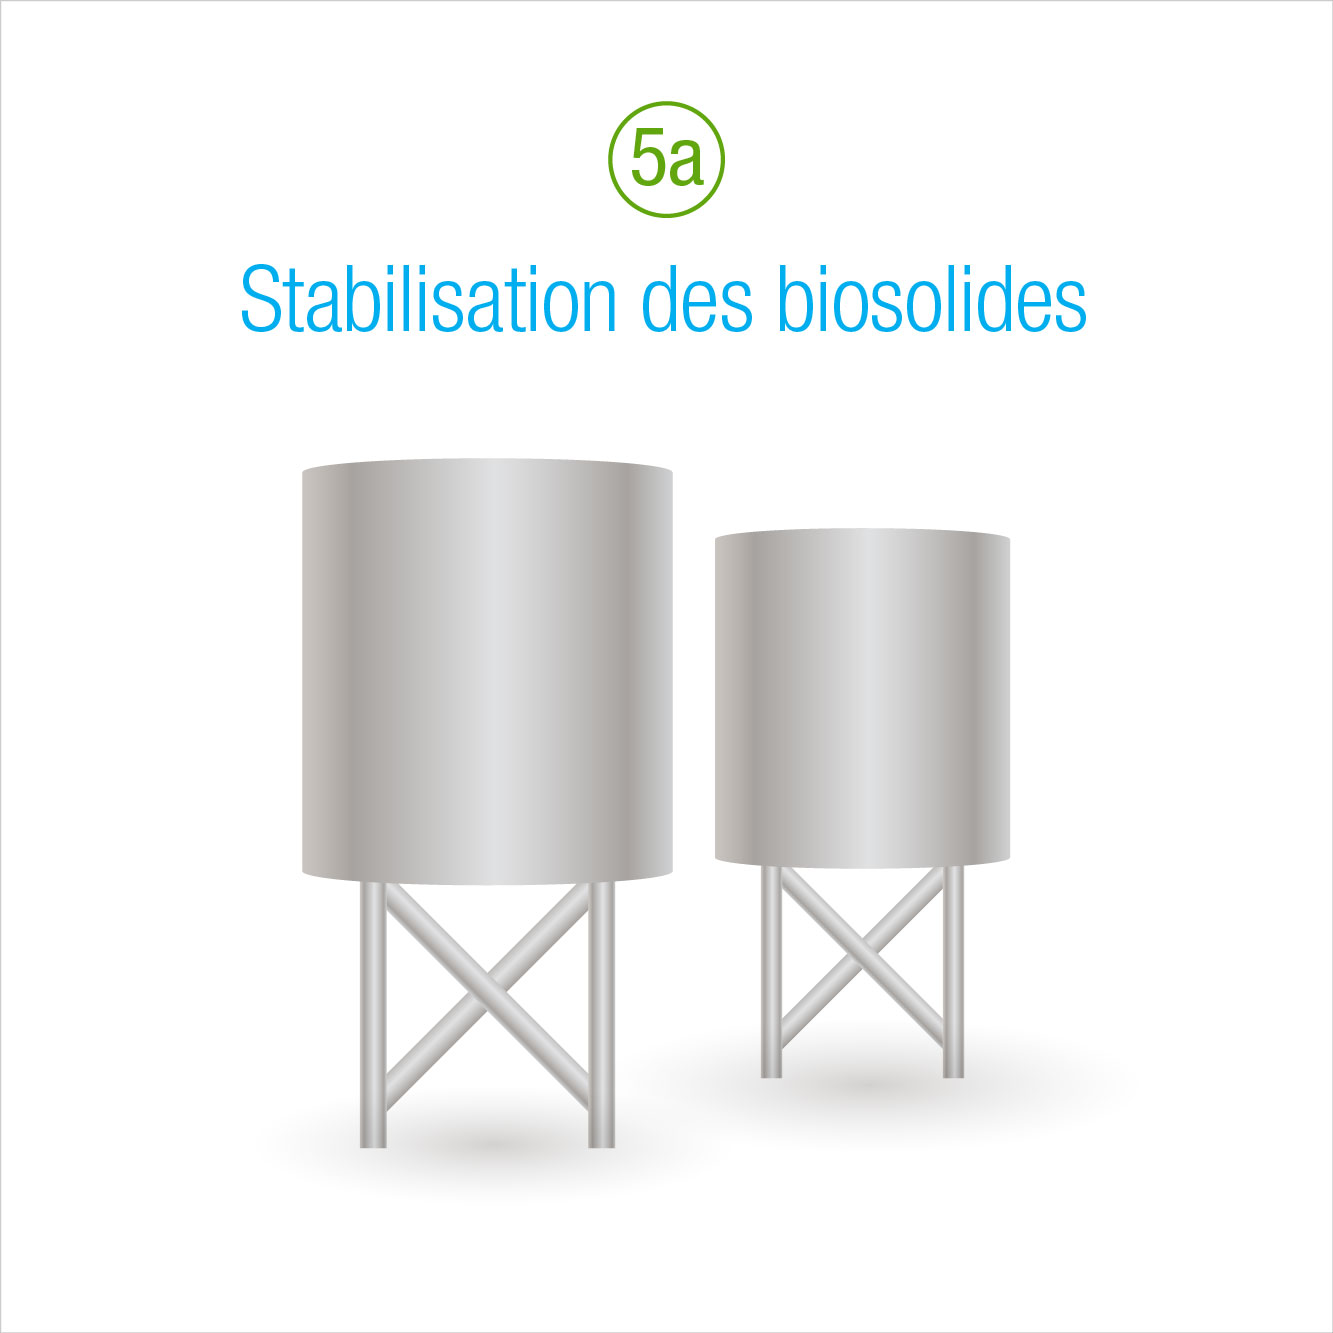 5a: Stabilisation des biosolids